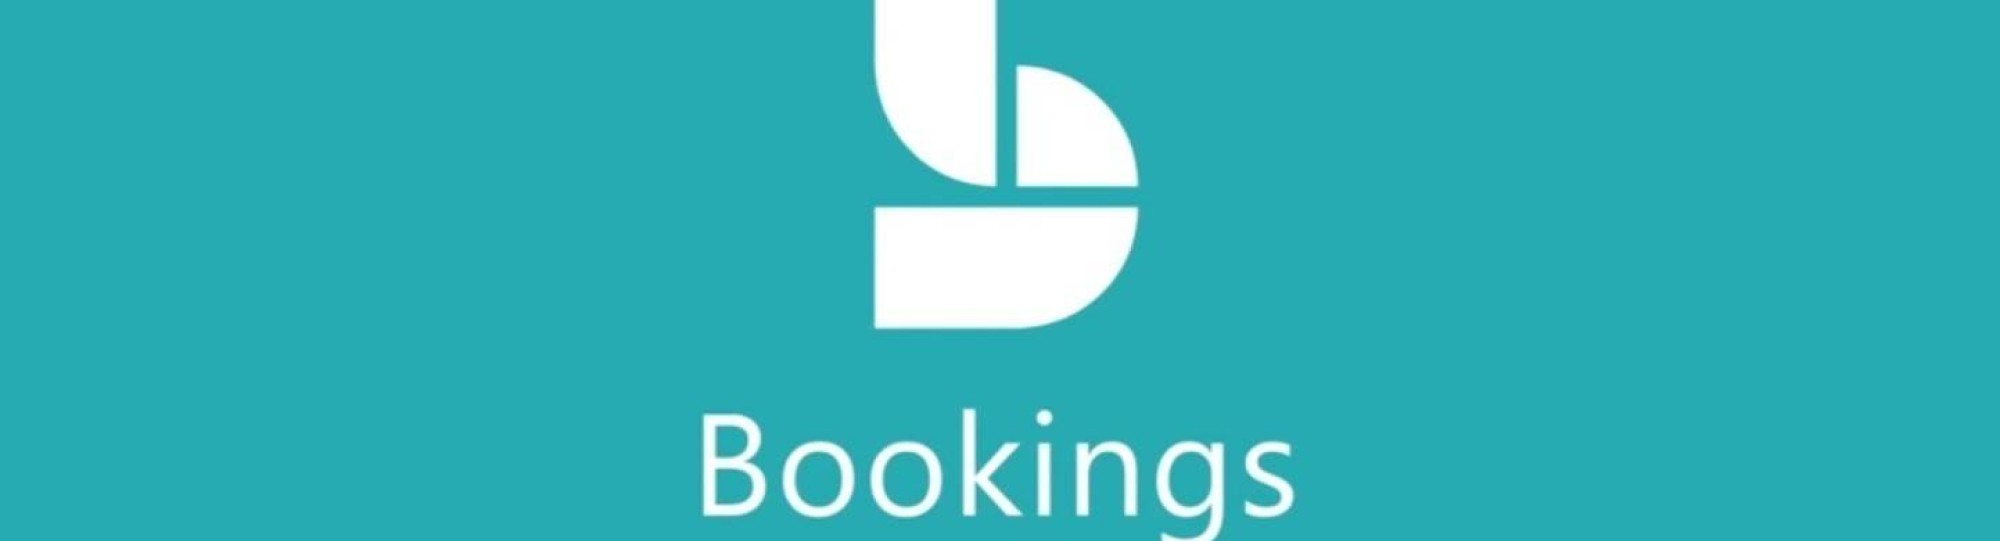 logo MS Bookings 1000x800 pixels